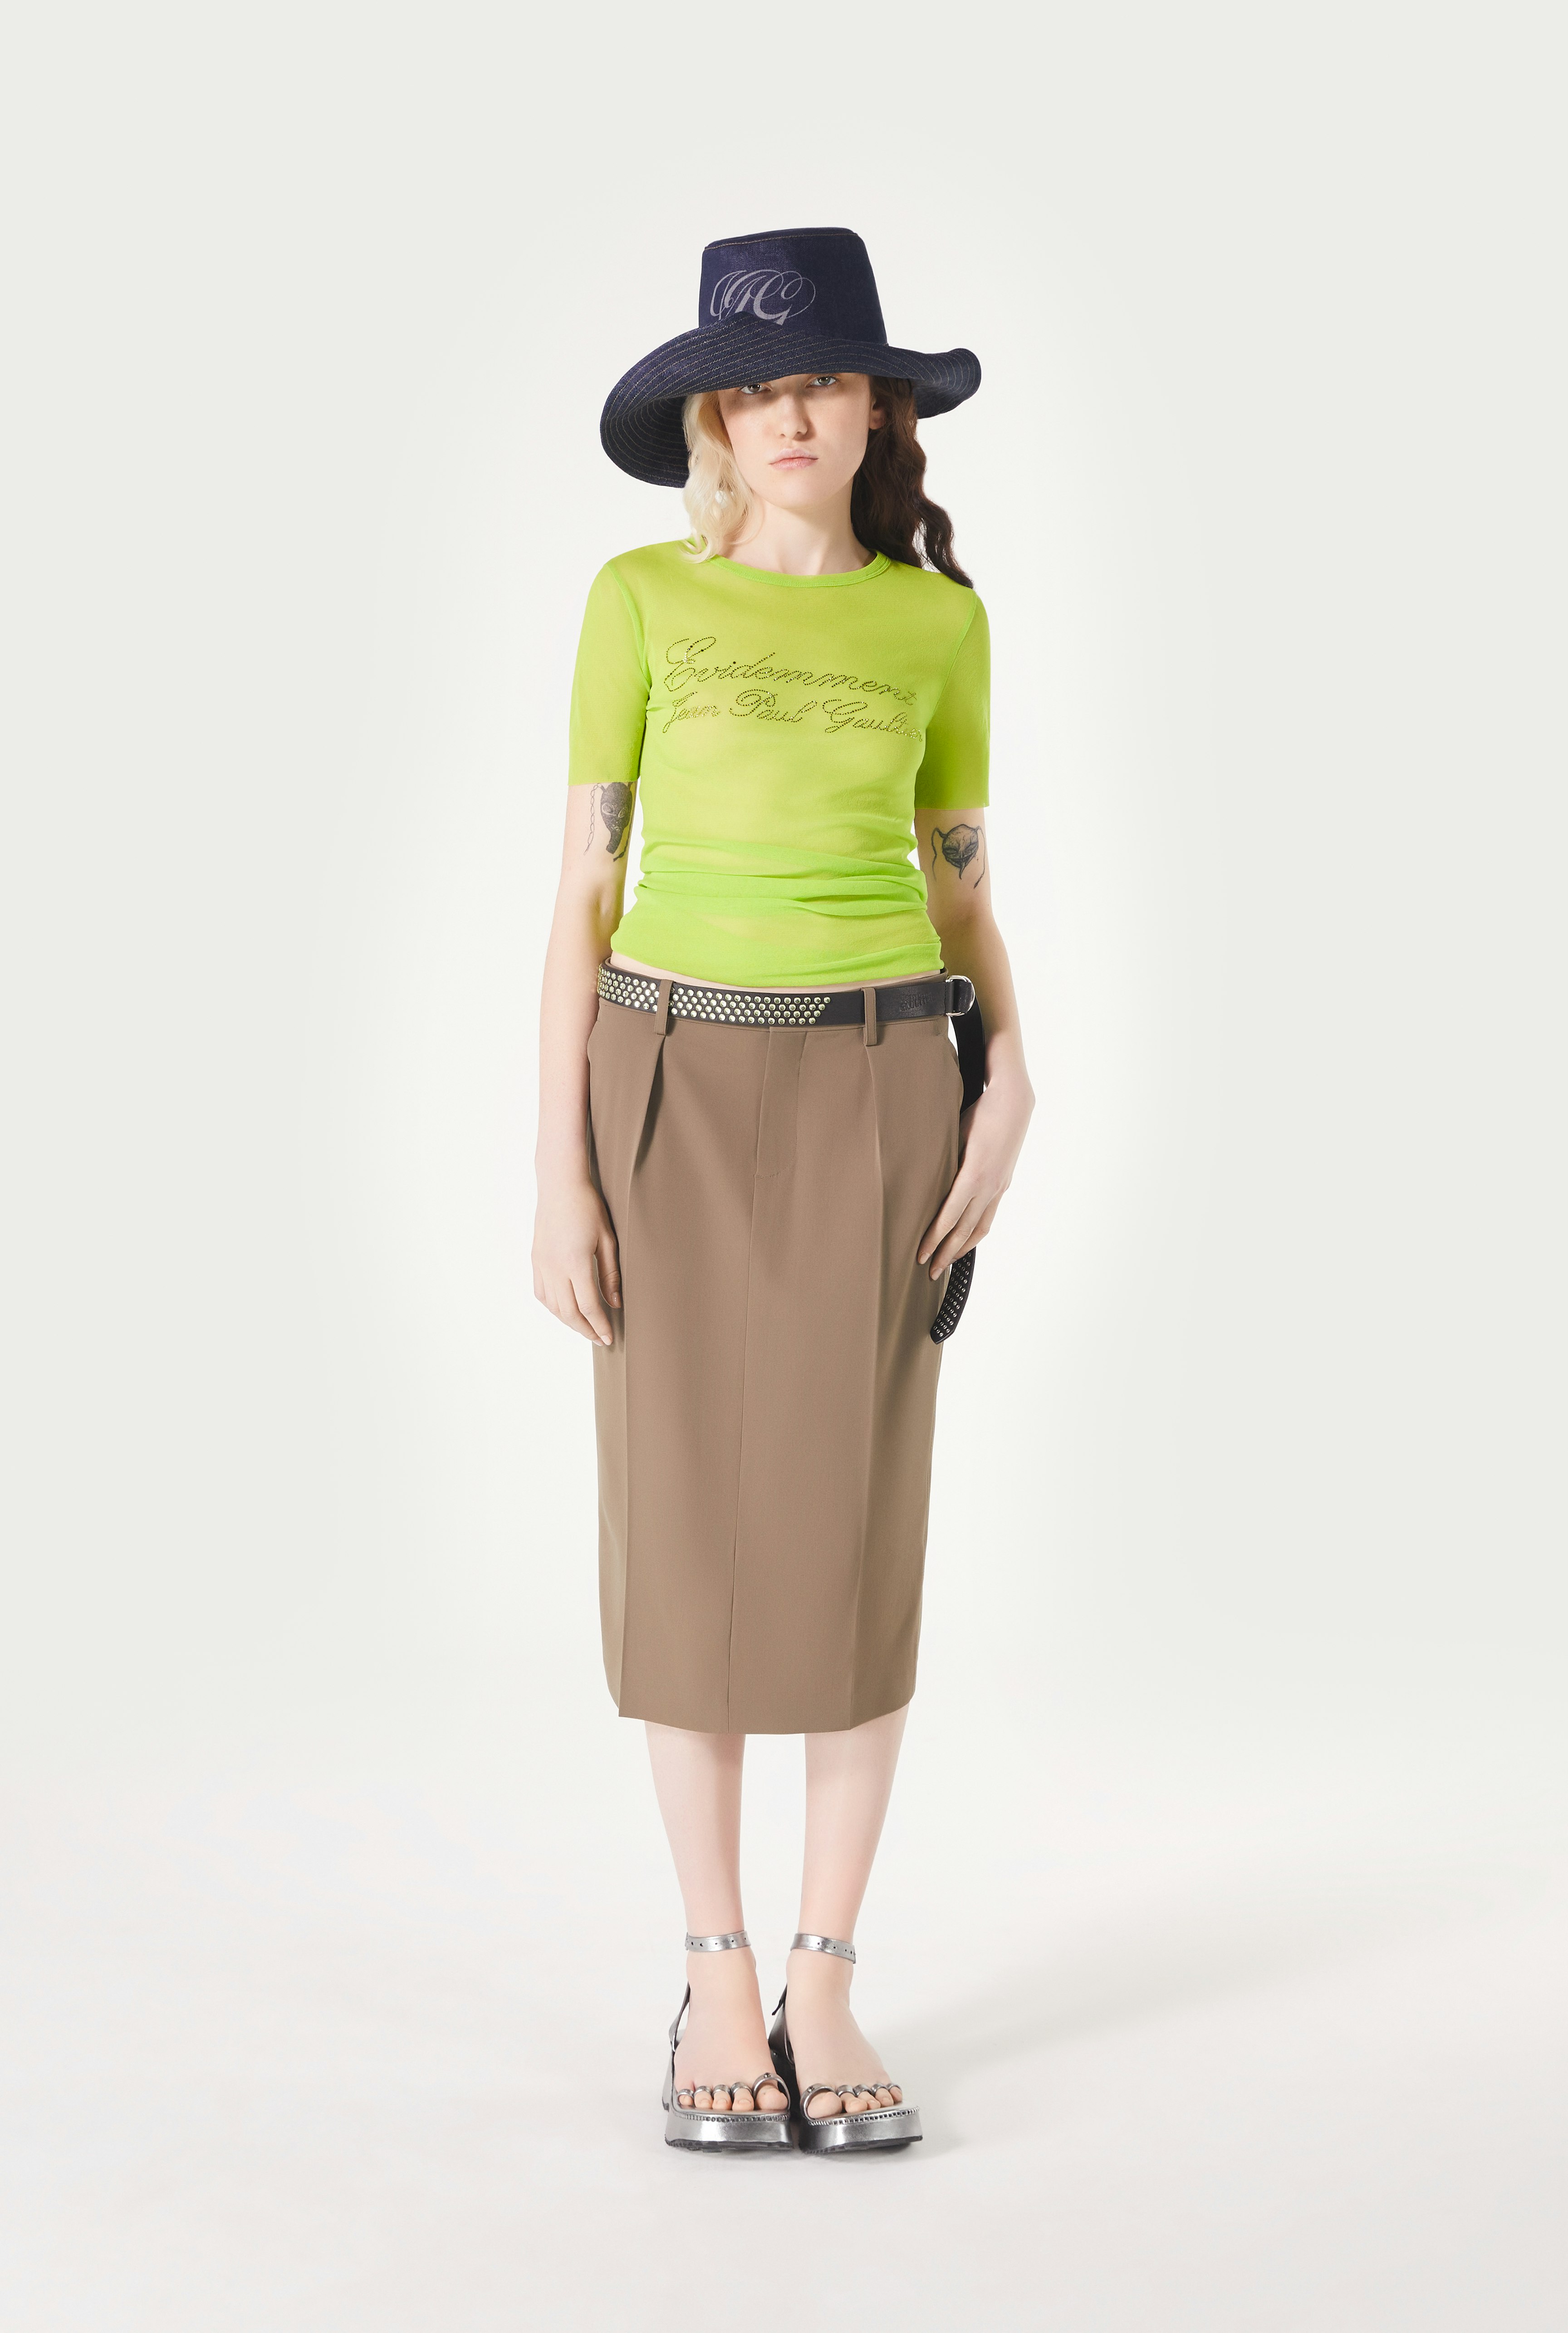 The Pencil Skirt Jean Paul Gaultier